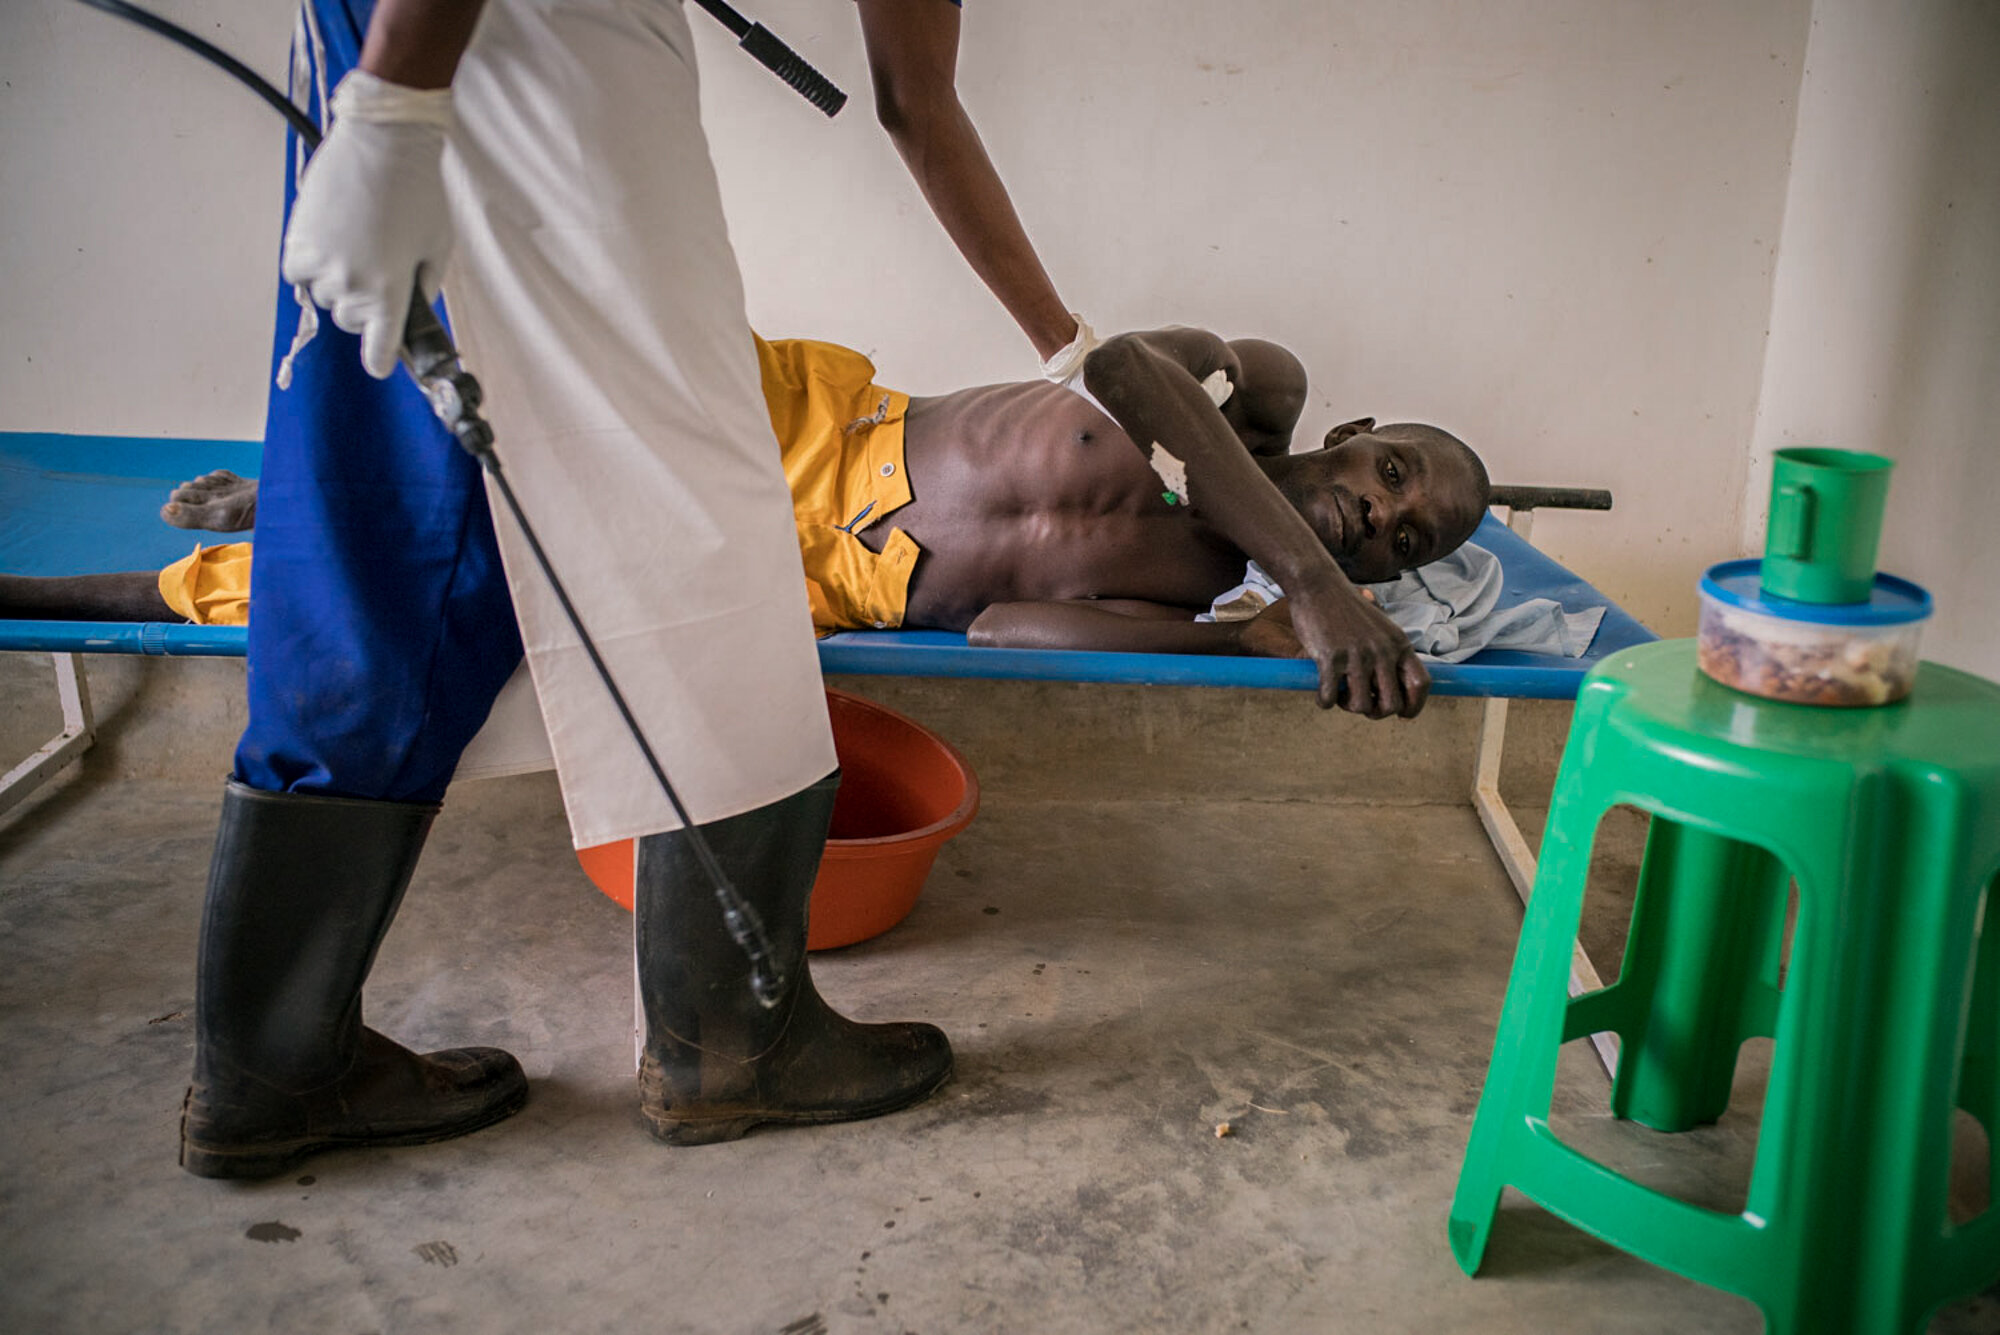  Medicins Sans Frontiers / Doctors Without Borders cholera treatment center. Sebagoro, Hoima province, Uganda. March 9, 2018.  